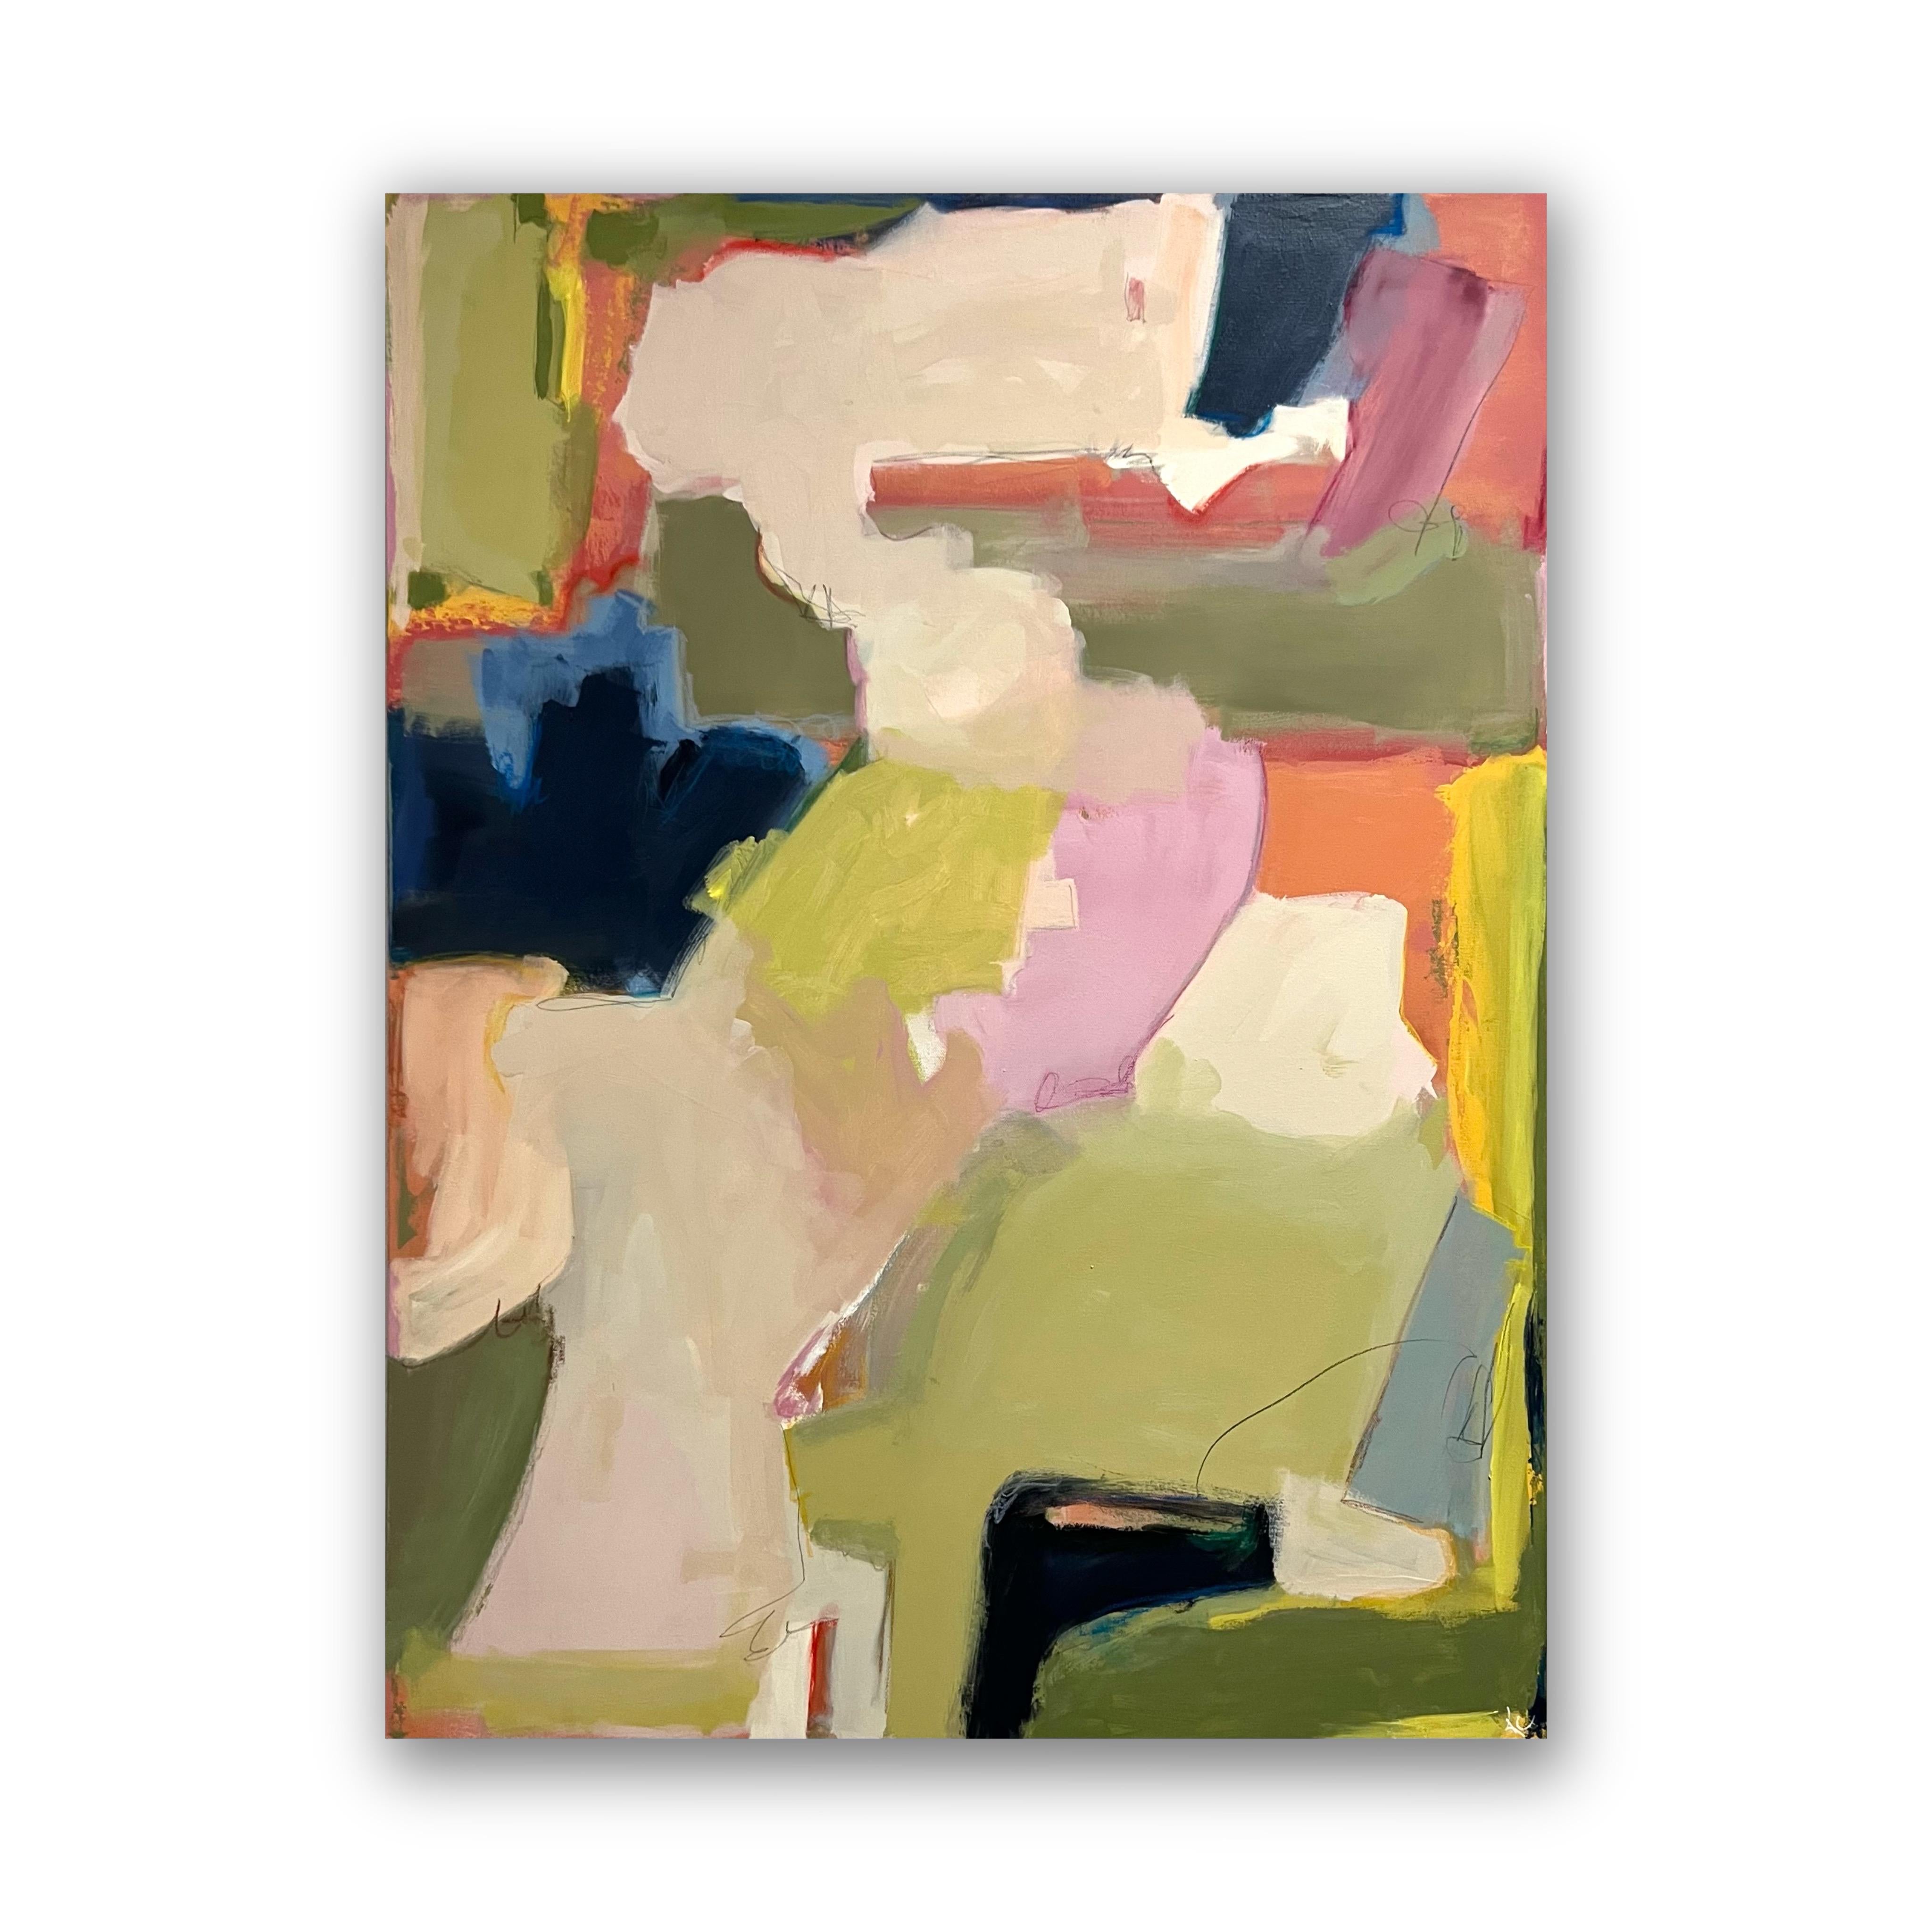 Daily News (Abstract, Gestural, Navy, Pink, Green) - Painting by Kelley Carman